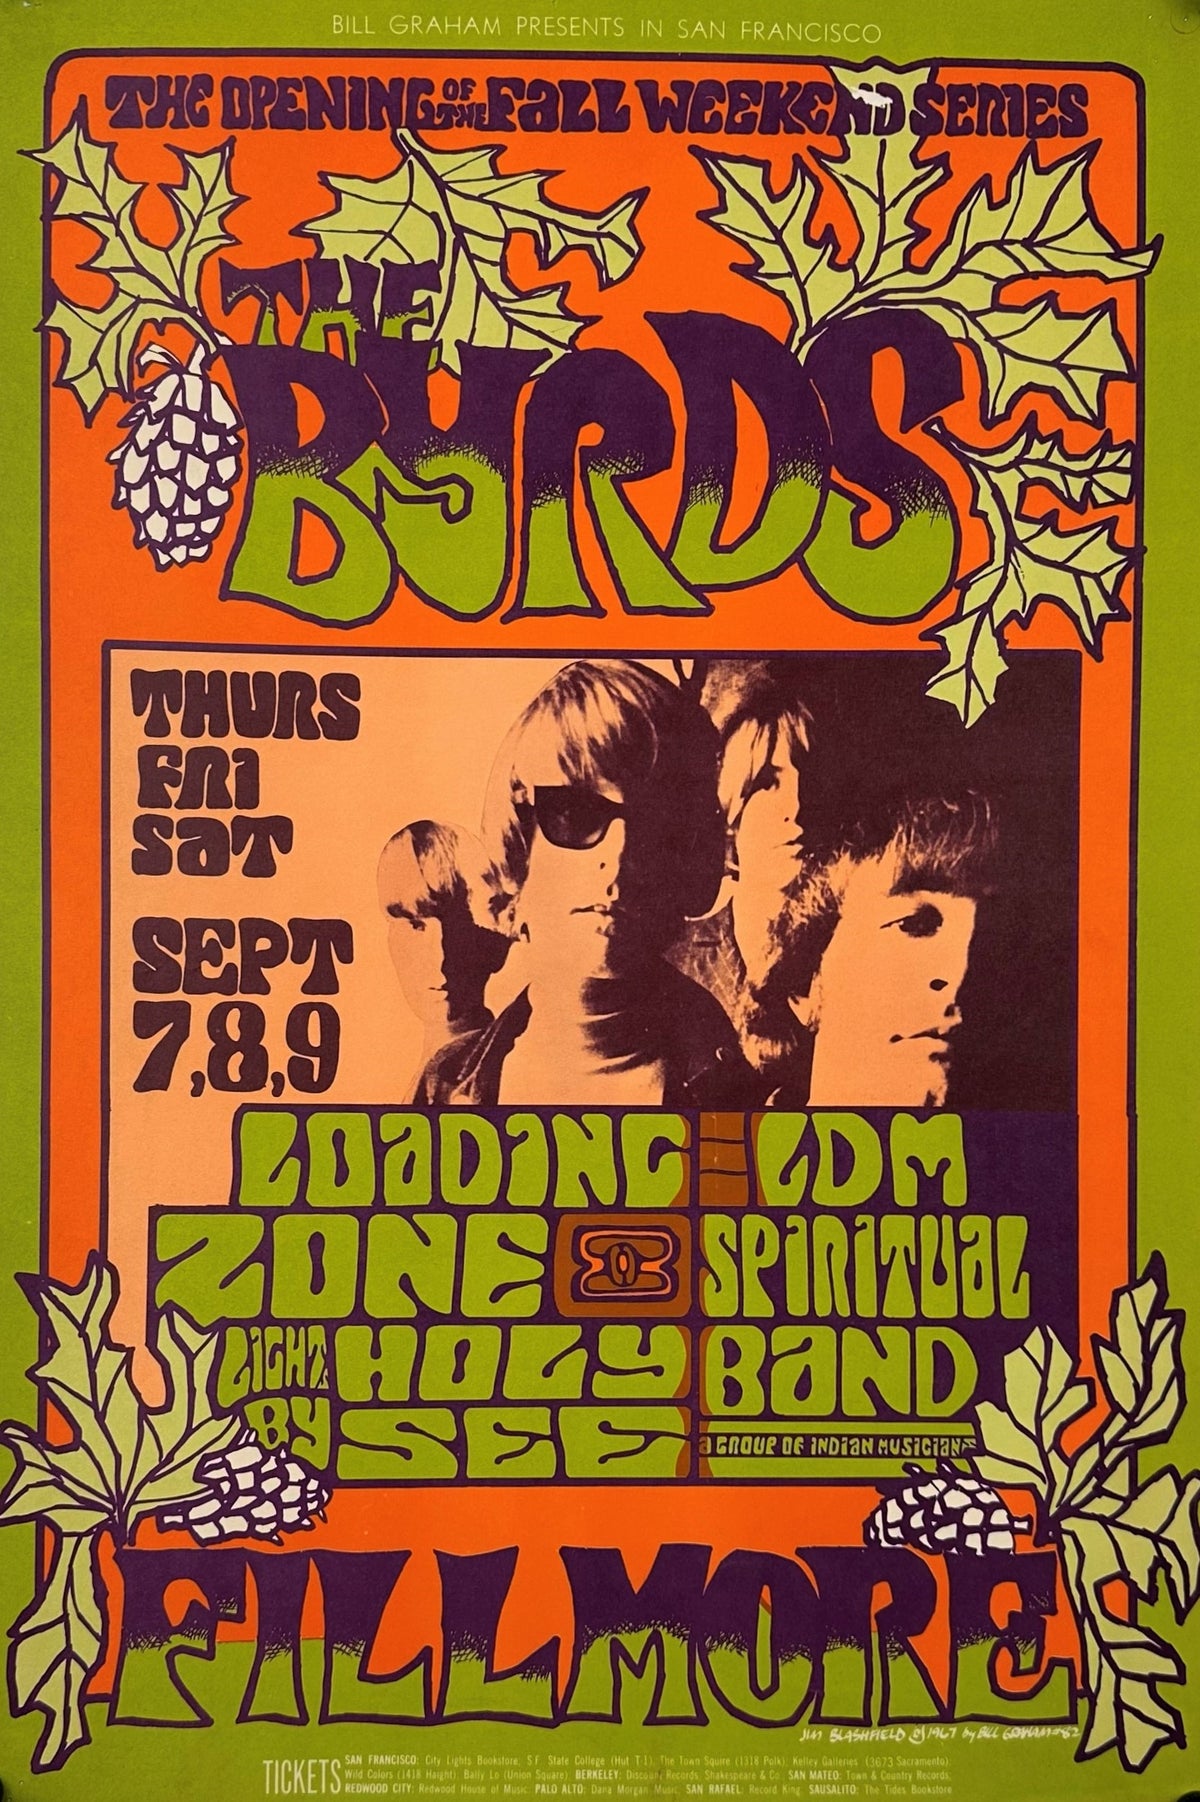 Byrds BG-82 - Authentic Vintage Poster